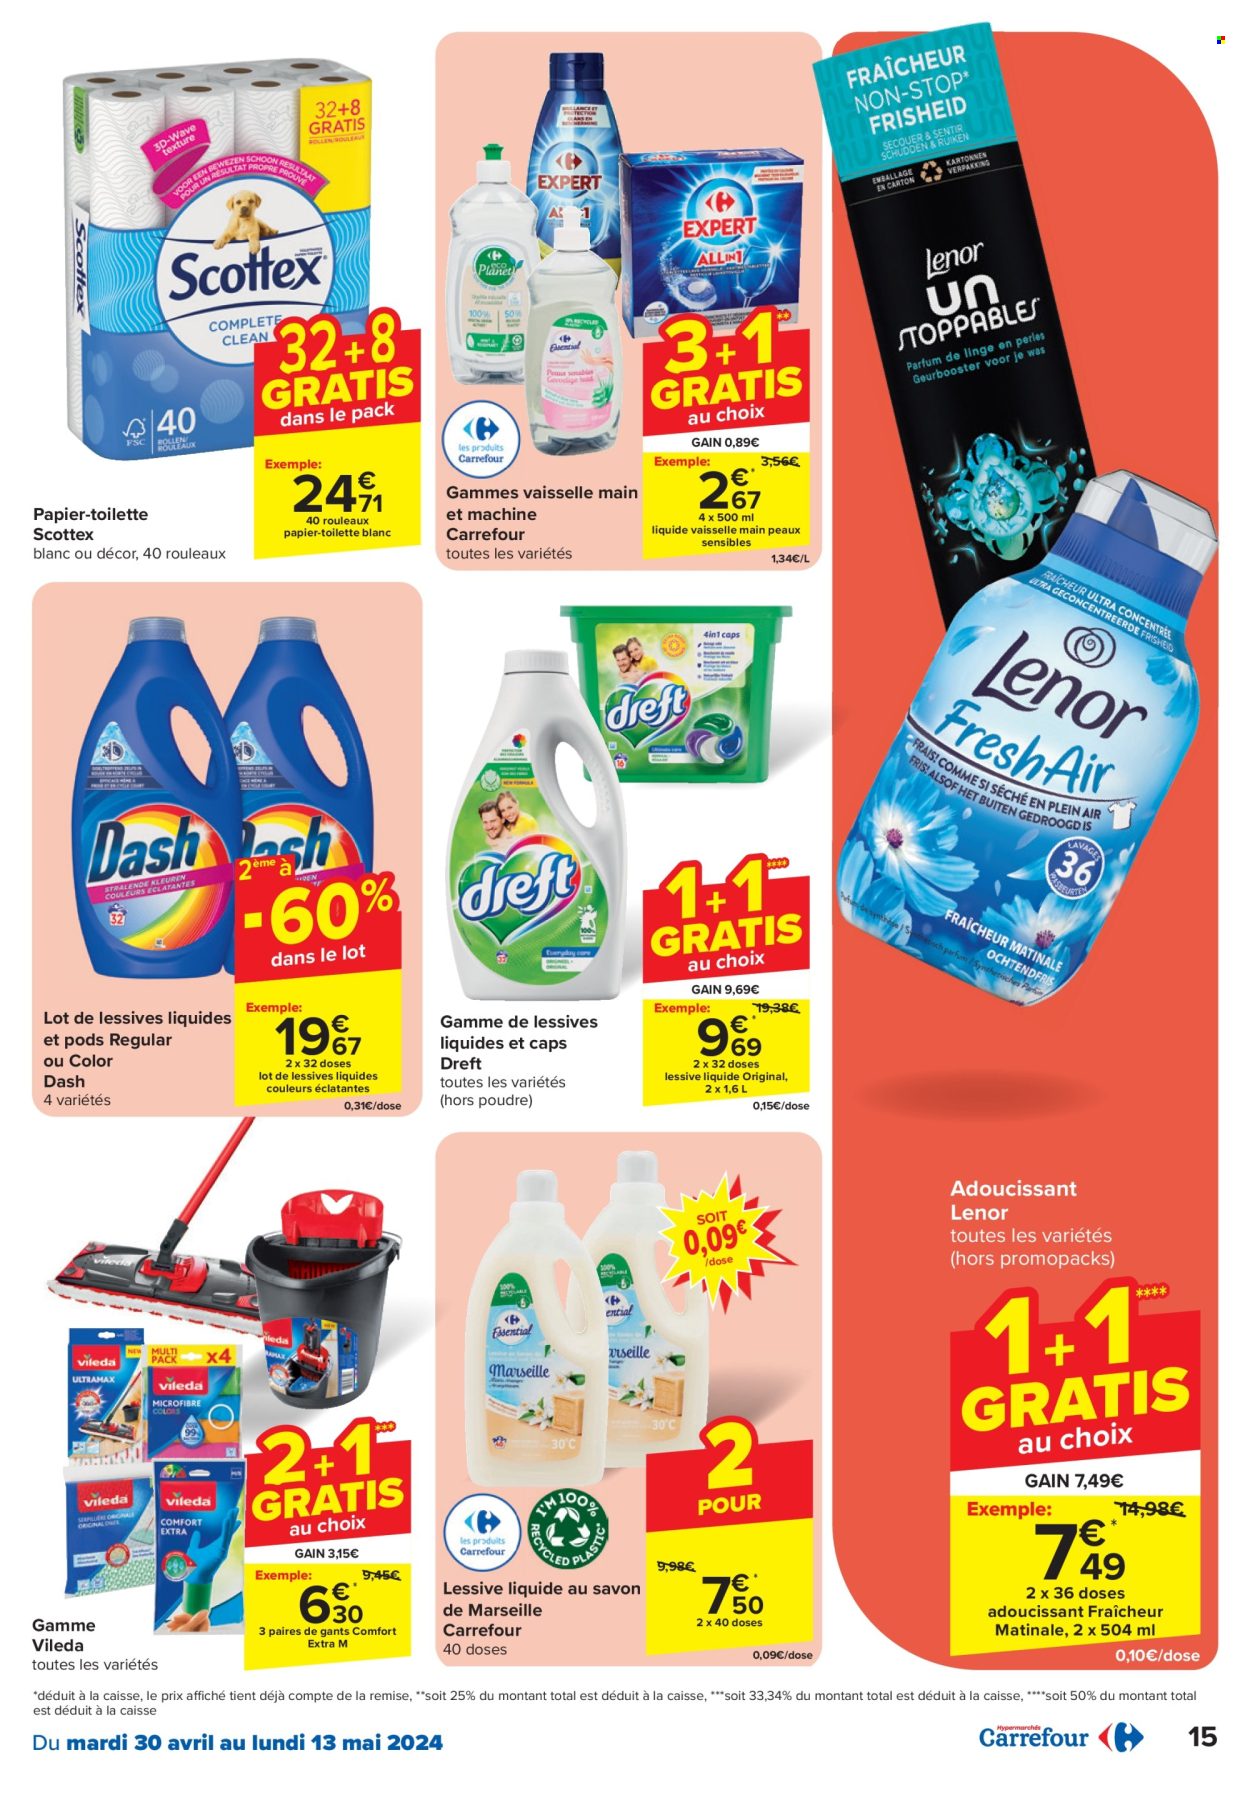 thumbnail - Carrefour hypermarkt-aanbieding - 30/04/2024 - 13/05/2024 -  producten in de aanbieding - Vileda, Lenor, Dreft, papier. Pagina 15.